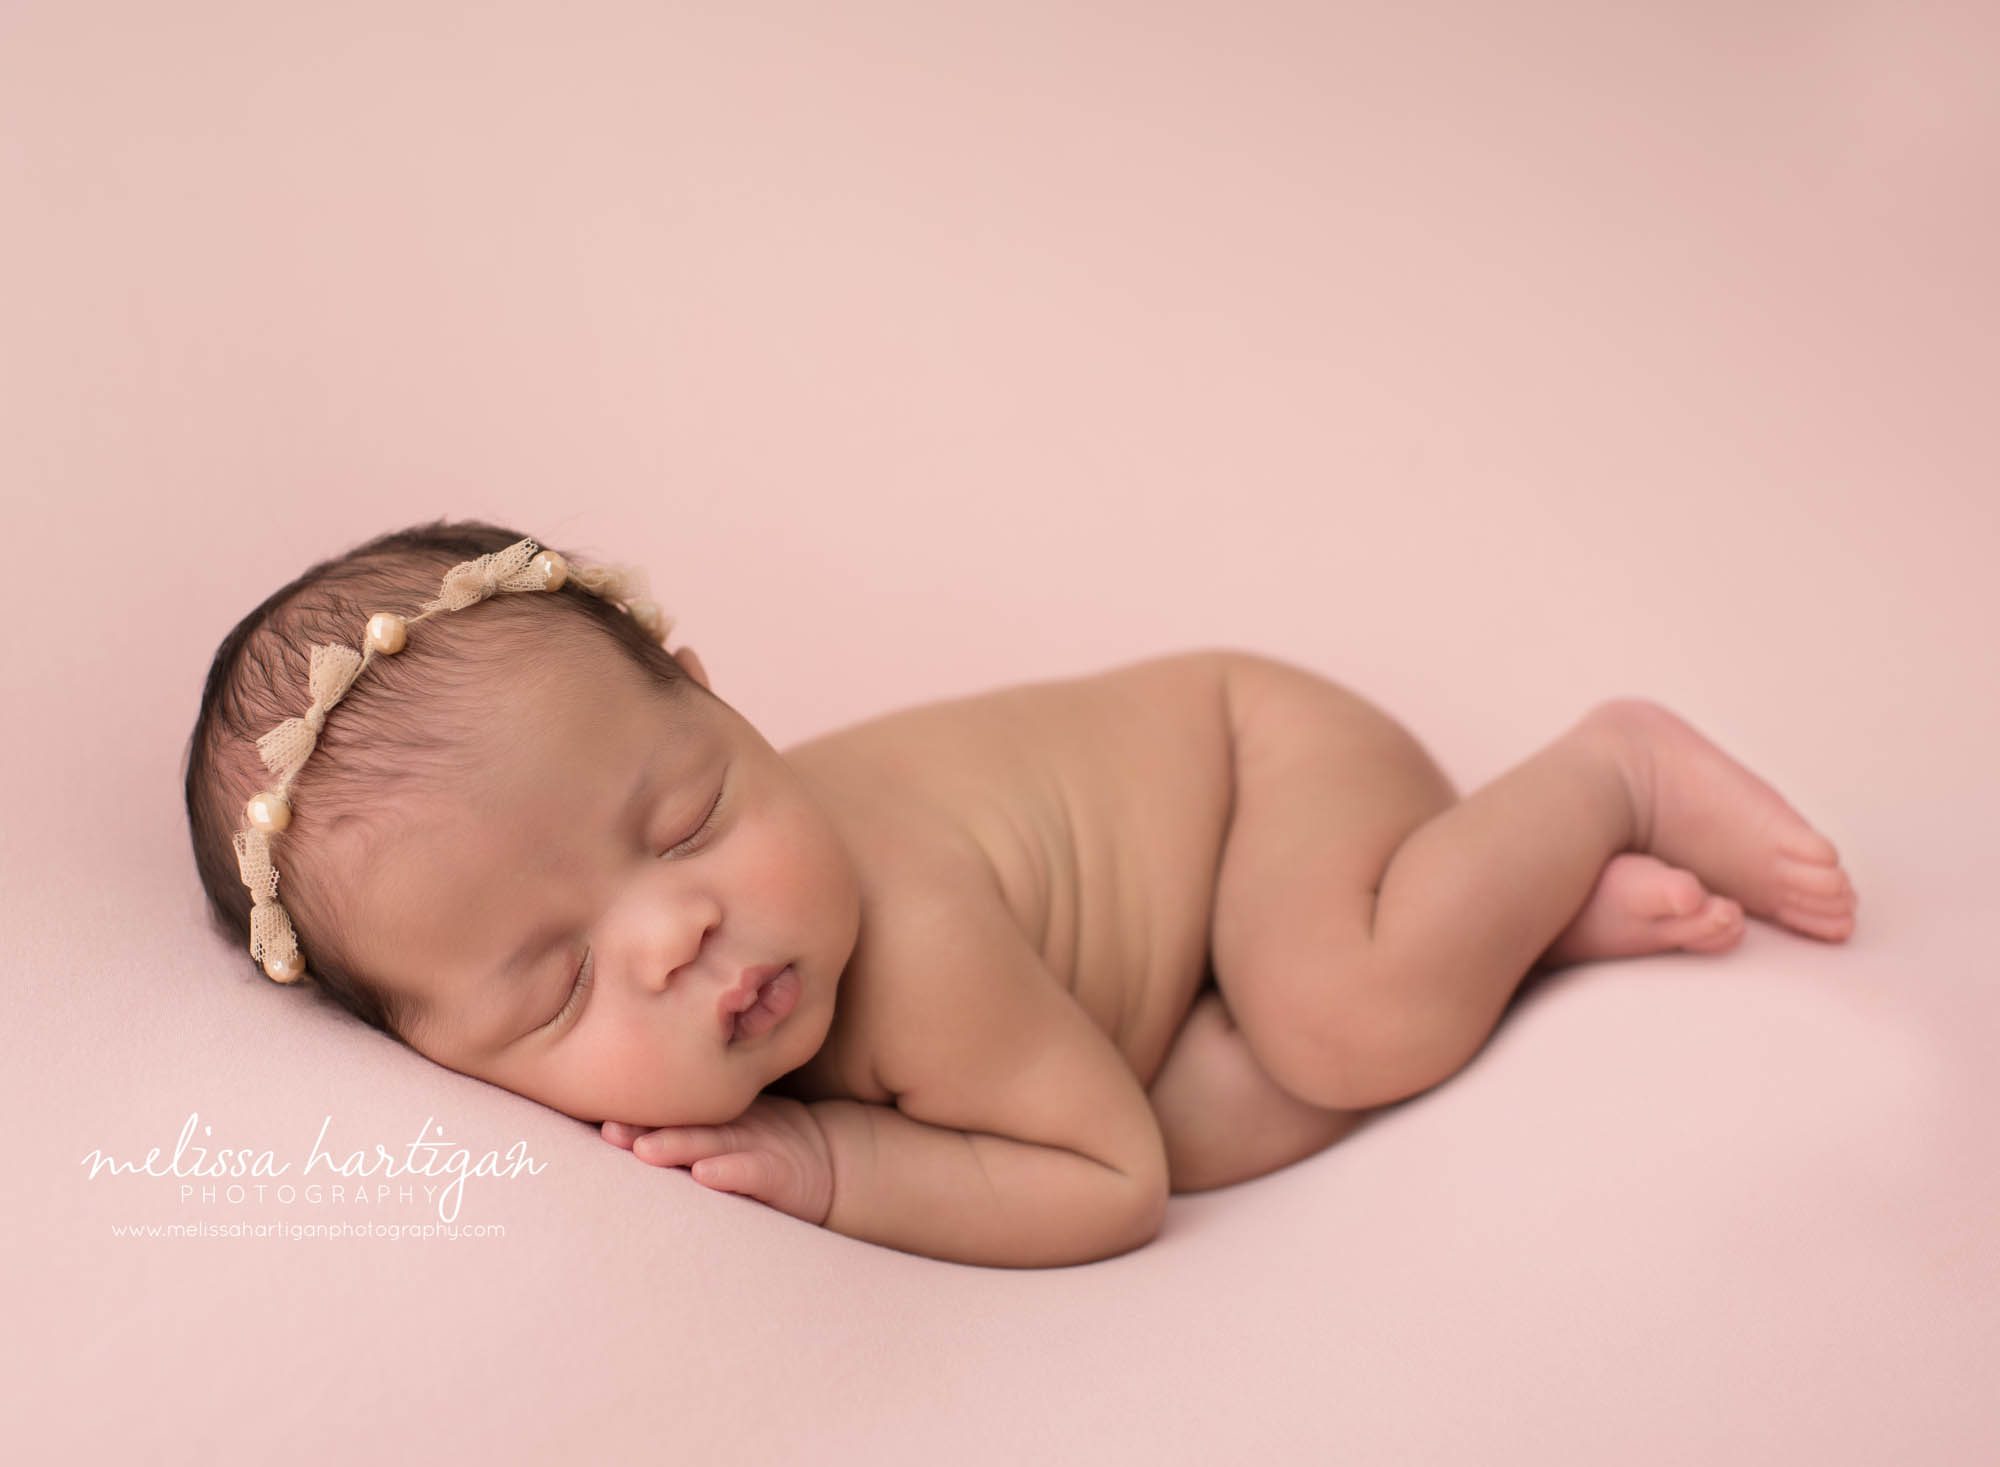 newborn baby girl posed on side on pink backdrop wearing gold beaded headband